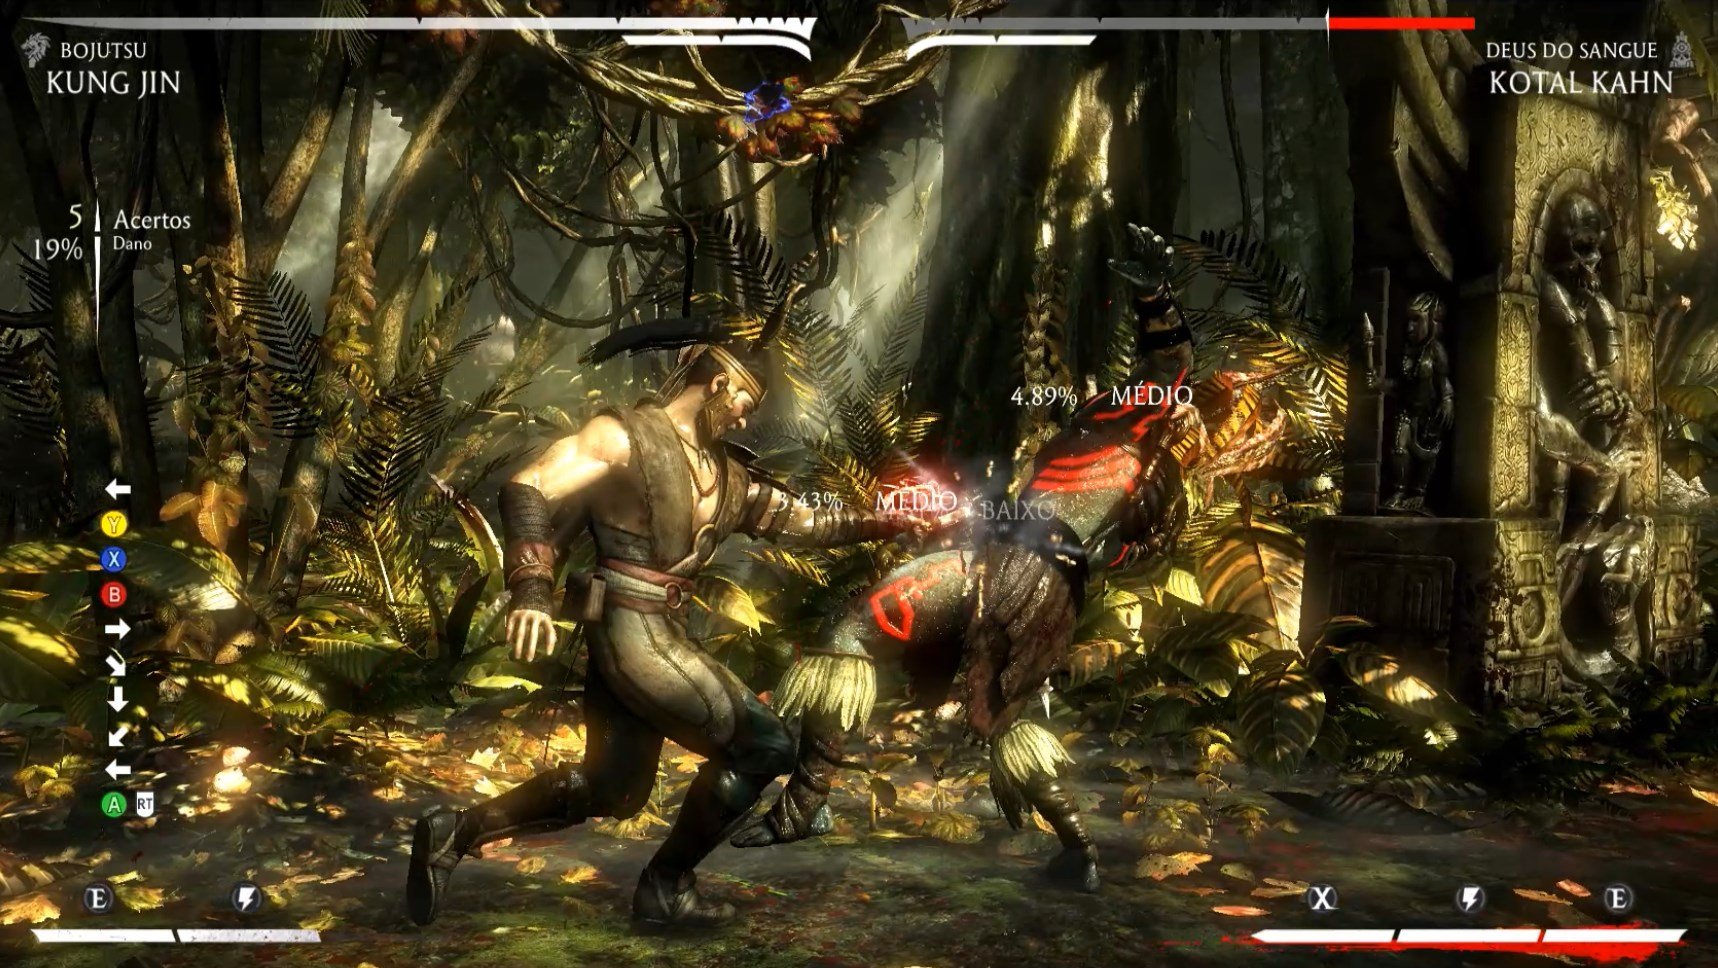 Mortal Kombat 11: Combo profissional de Baraka